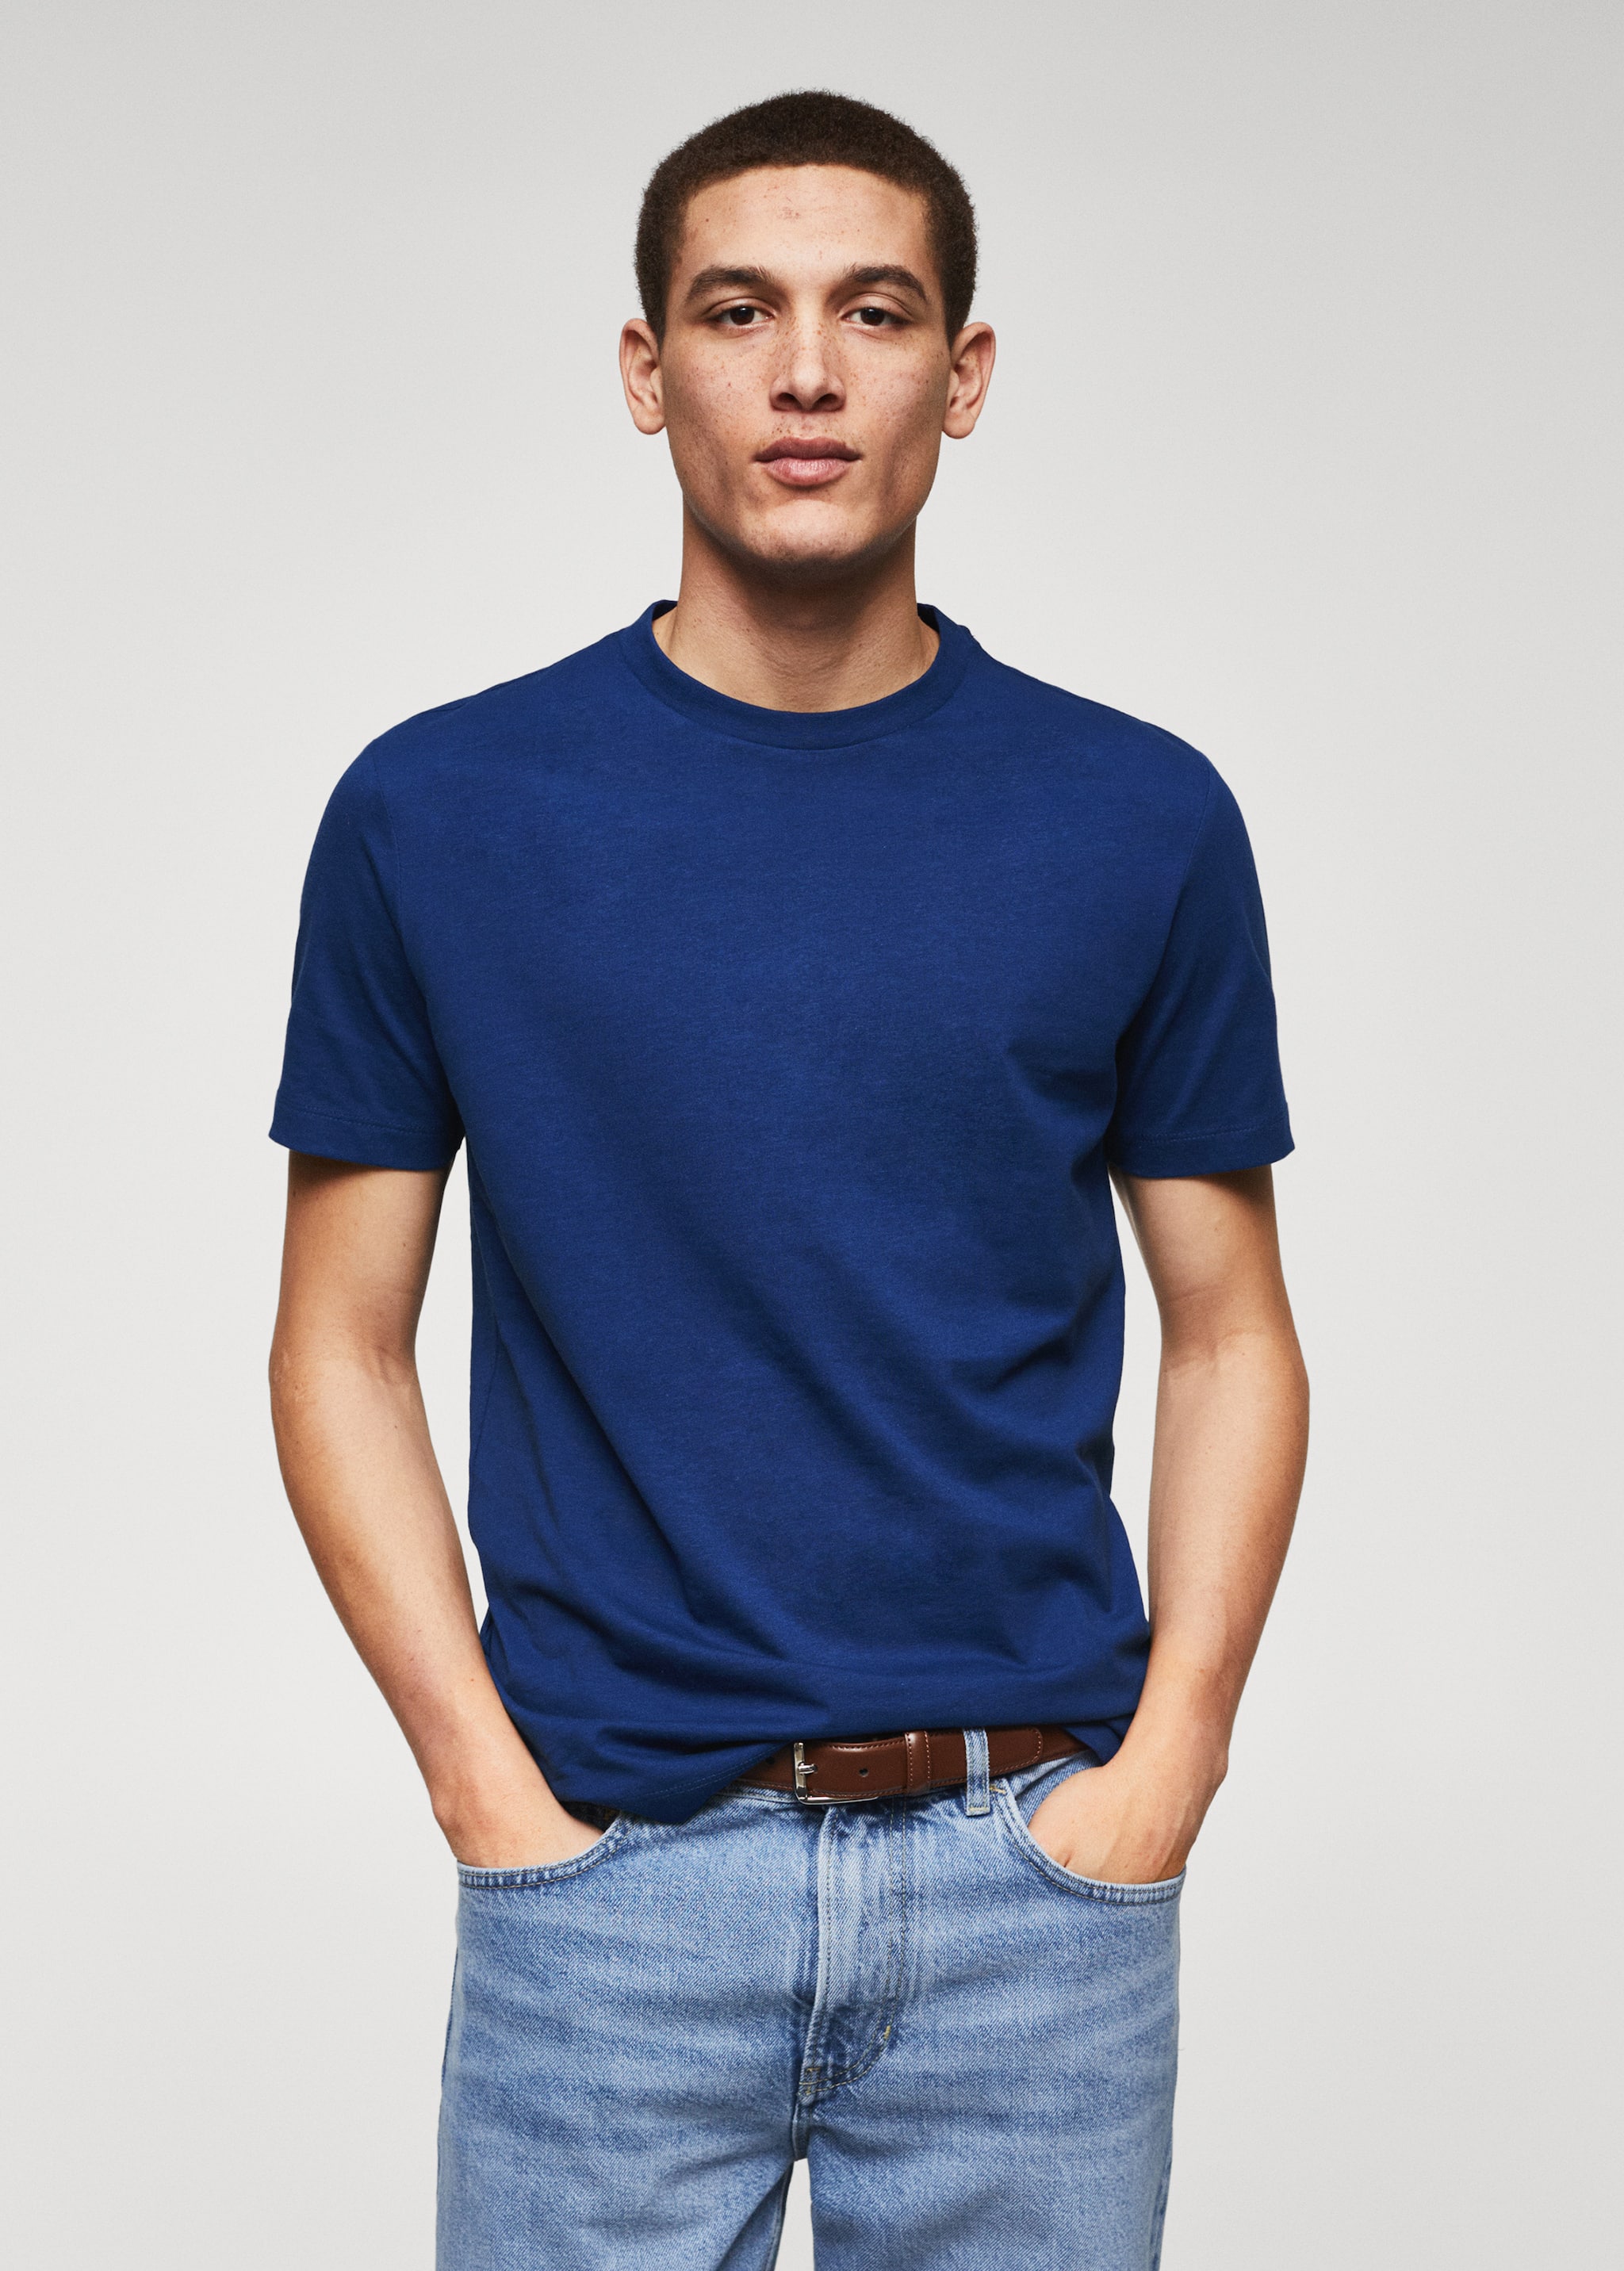 Camiseta básica algodón lightweight - Plano medio